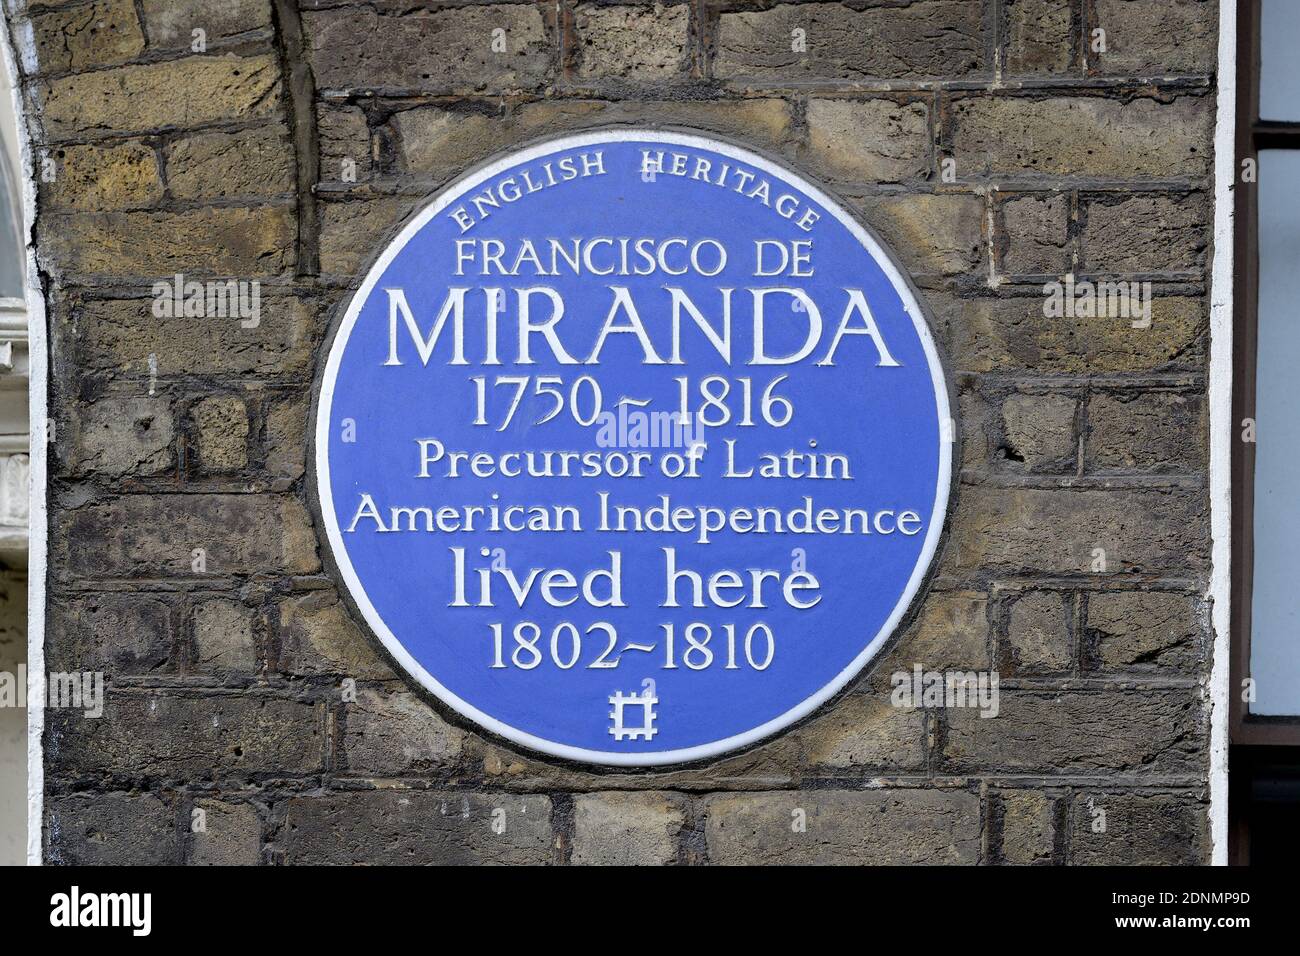 London, UK. Commemorative plaque at 58 Grafton Way: 'Francisco De Miranda 1750-1816 Precursor of Latin American Independence lived here 1802-1810' Stock Photo